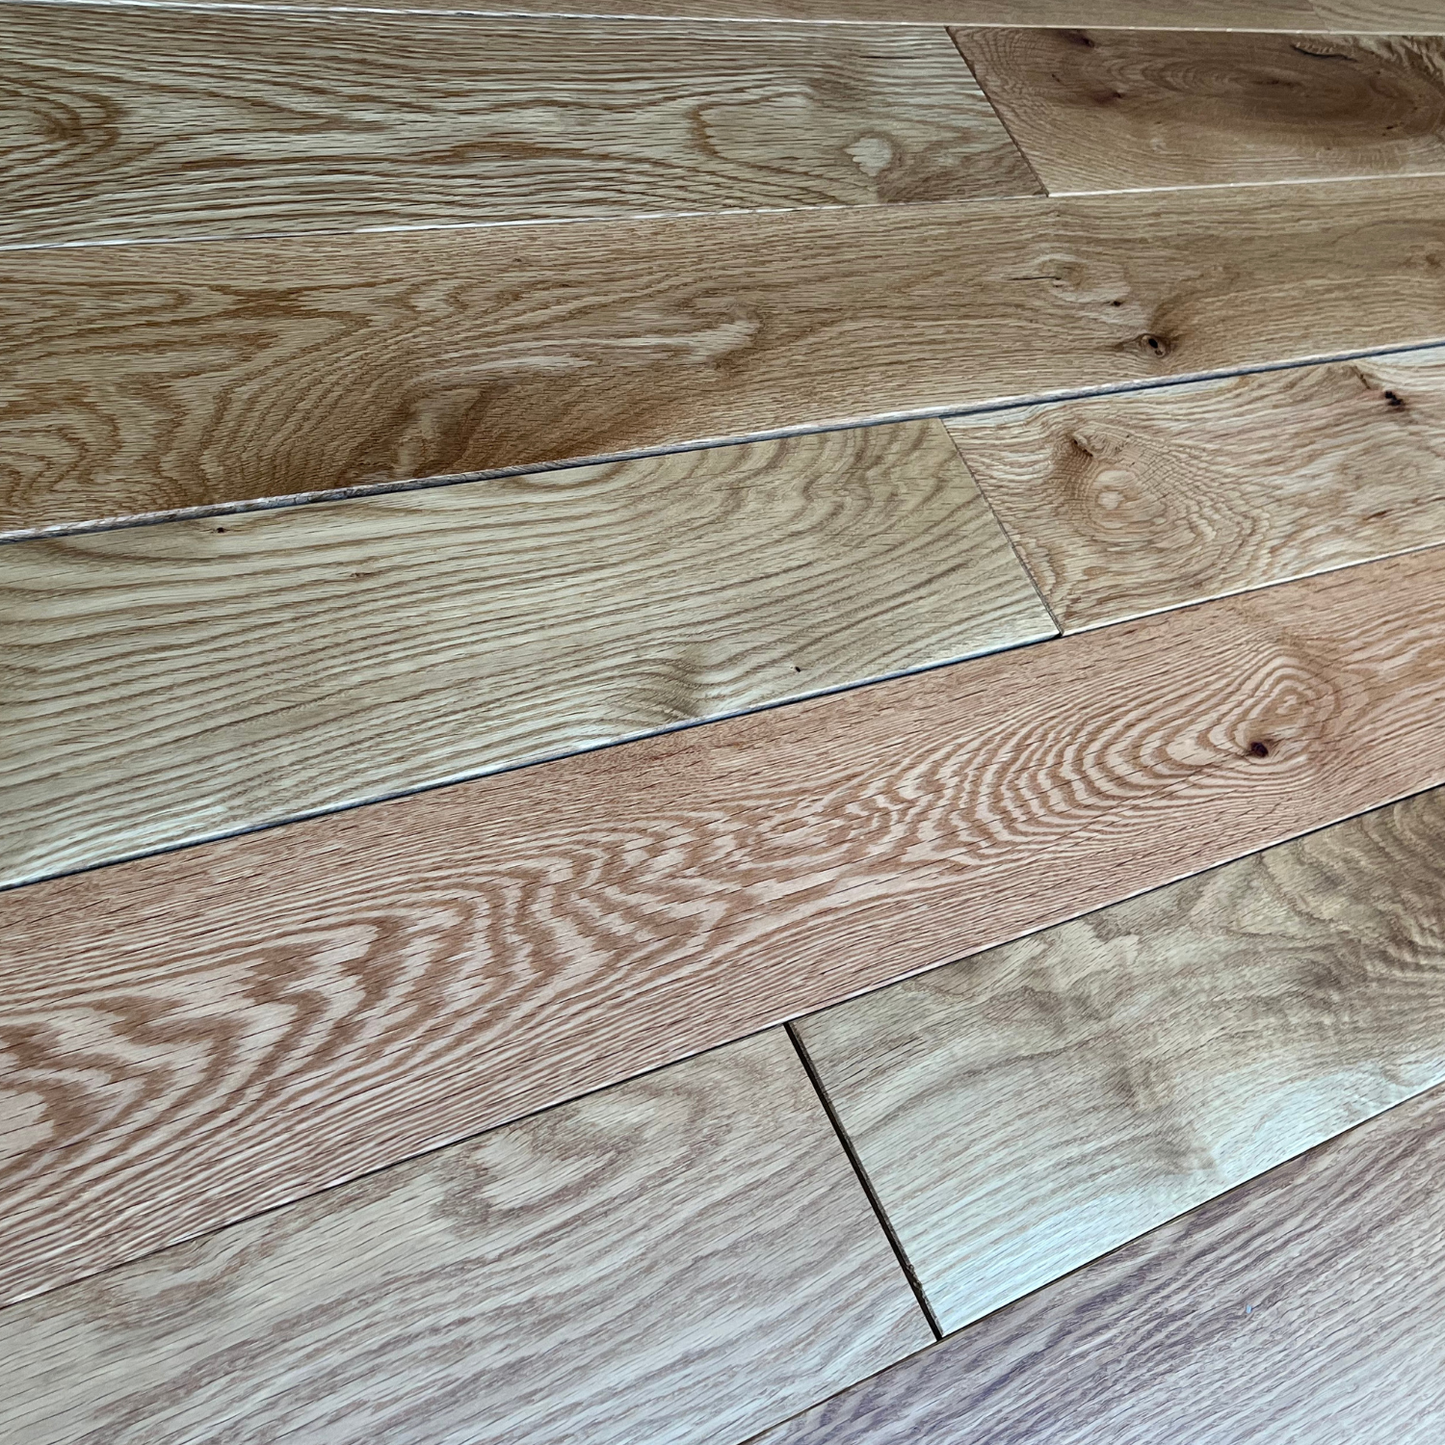 5" x 3/4" Solid Oak Munsel Stain Prefinished Hardwood Flooring